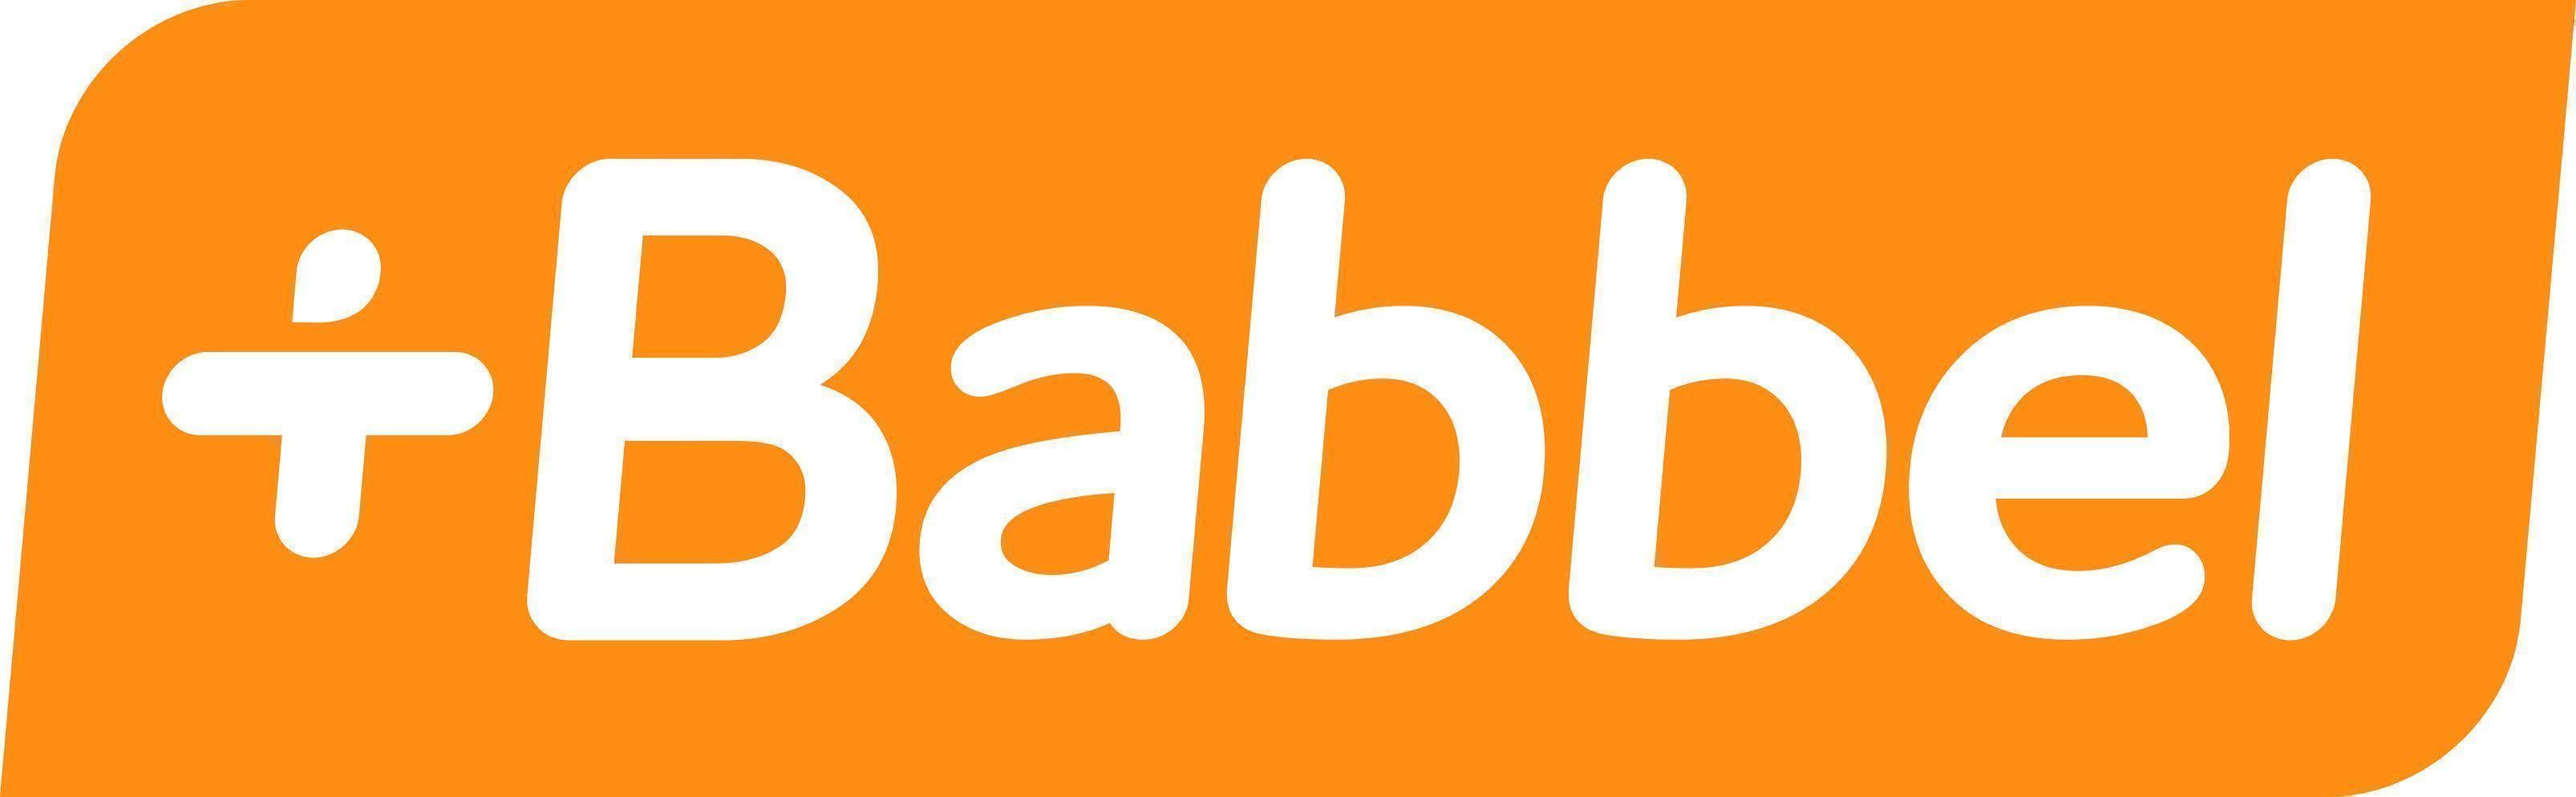 Babbel Logo - Babbel Competitors, Revenue and Employees Company Profile